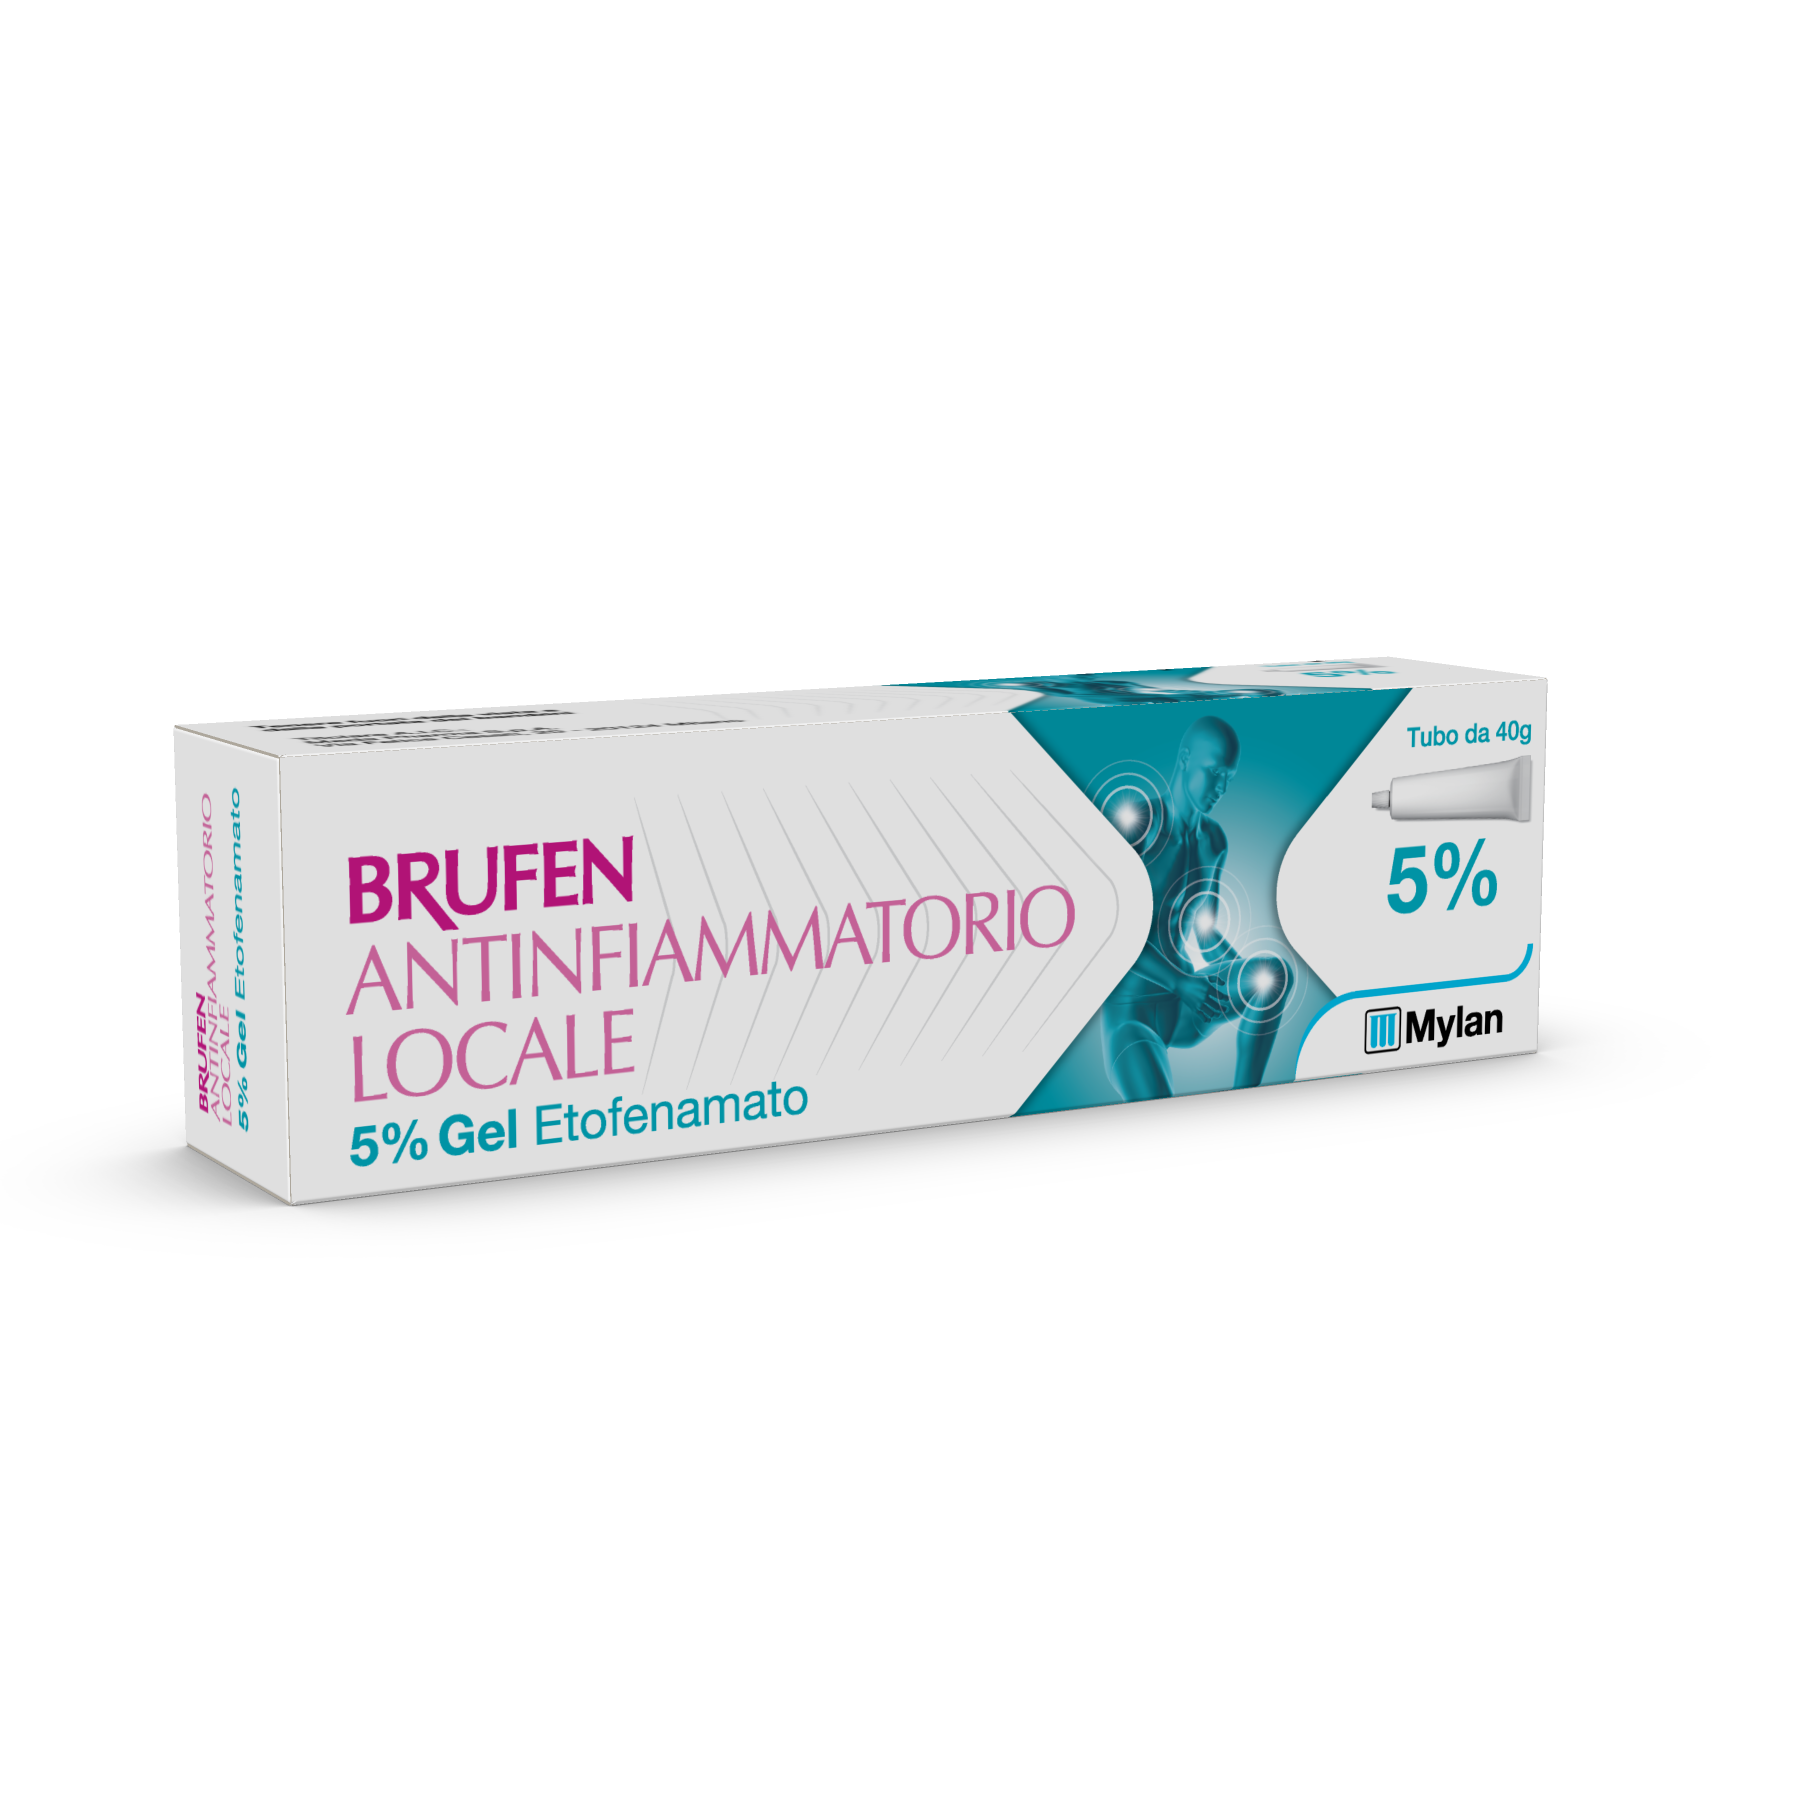 Brufen antinfiammatorio locale 5% gel 5 geltubo 40 g | Farmacia Online